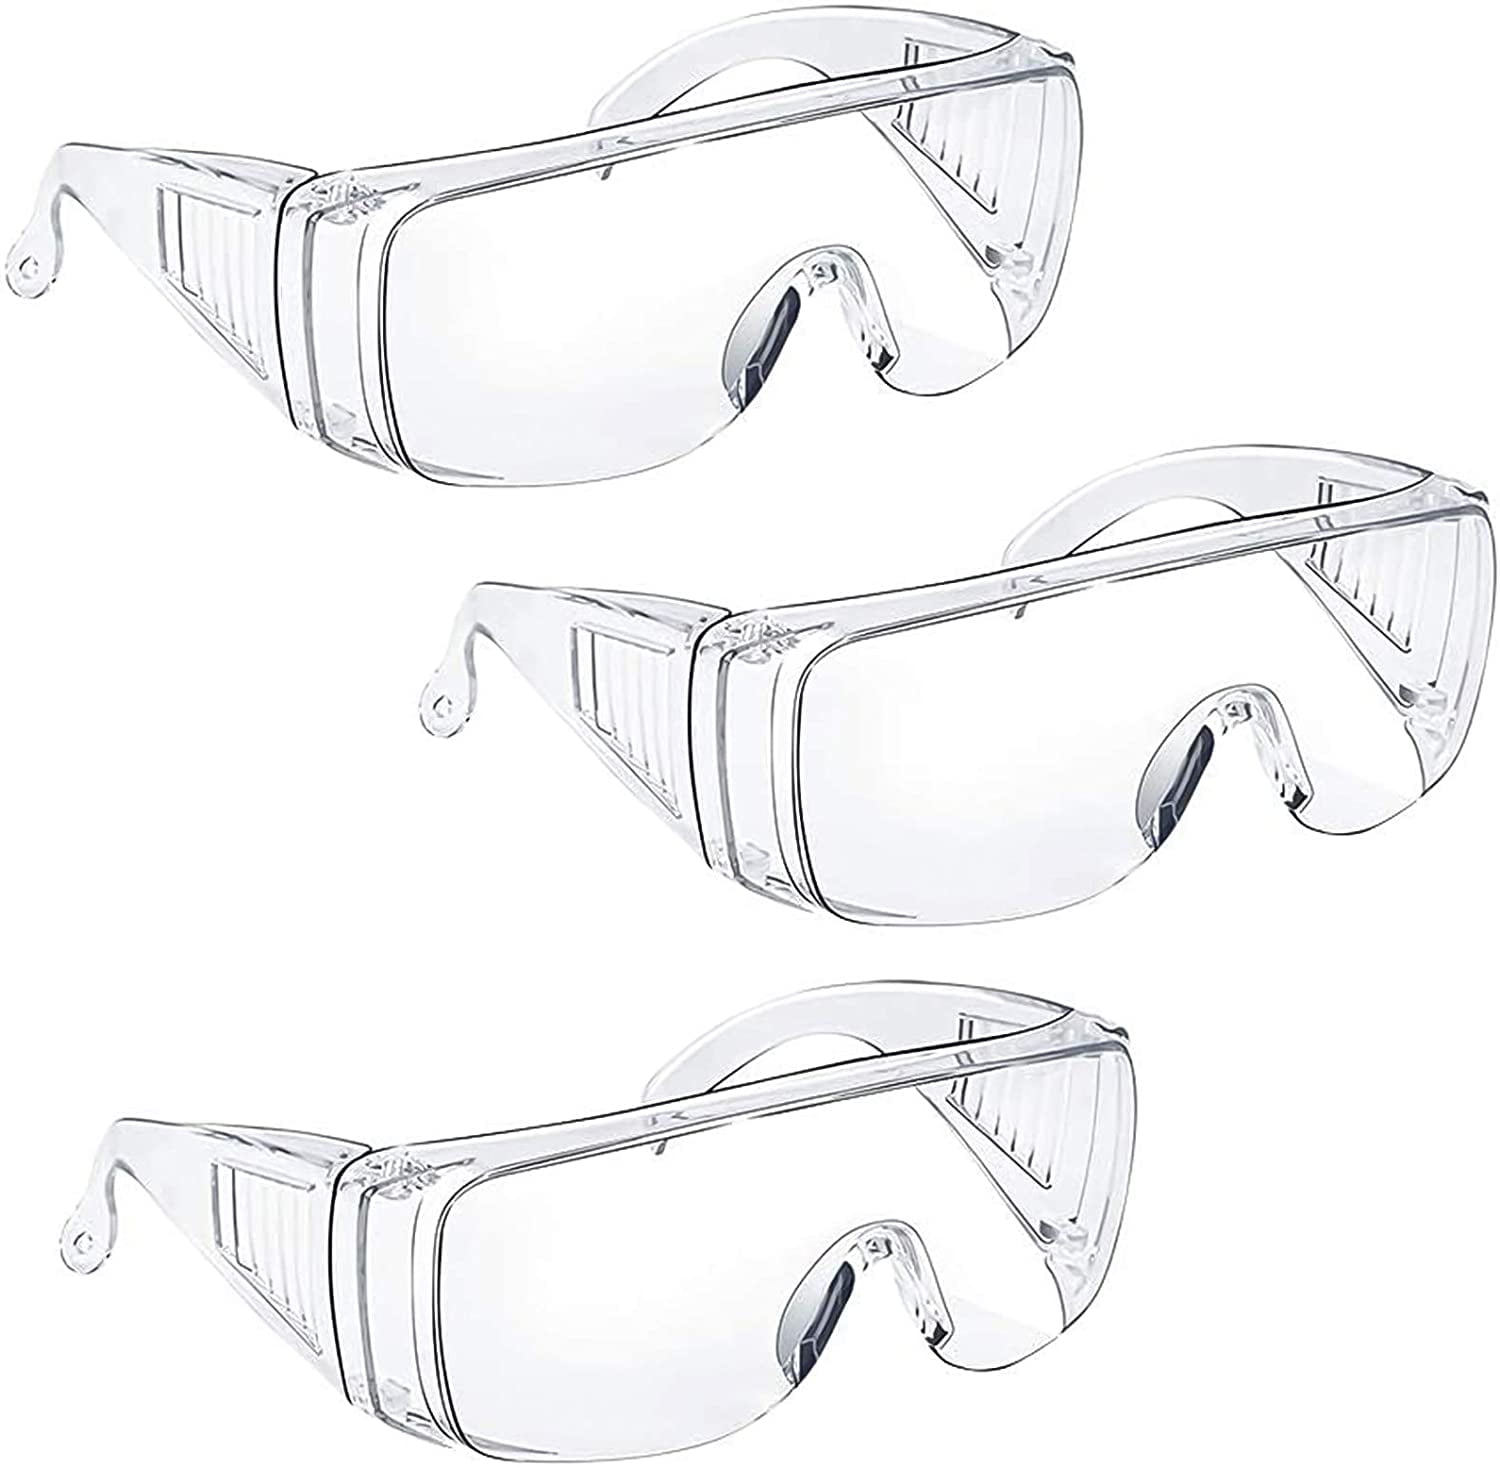 LARGE FRAME Safety Goggles Anti Fog Dust Splash-proof Glasses 3D Eye Protection 